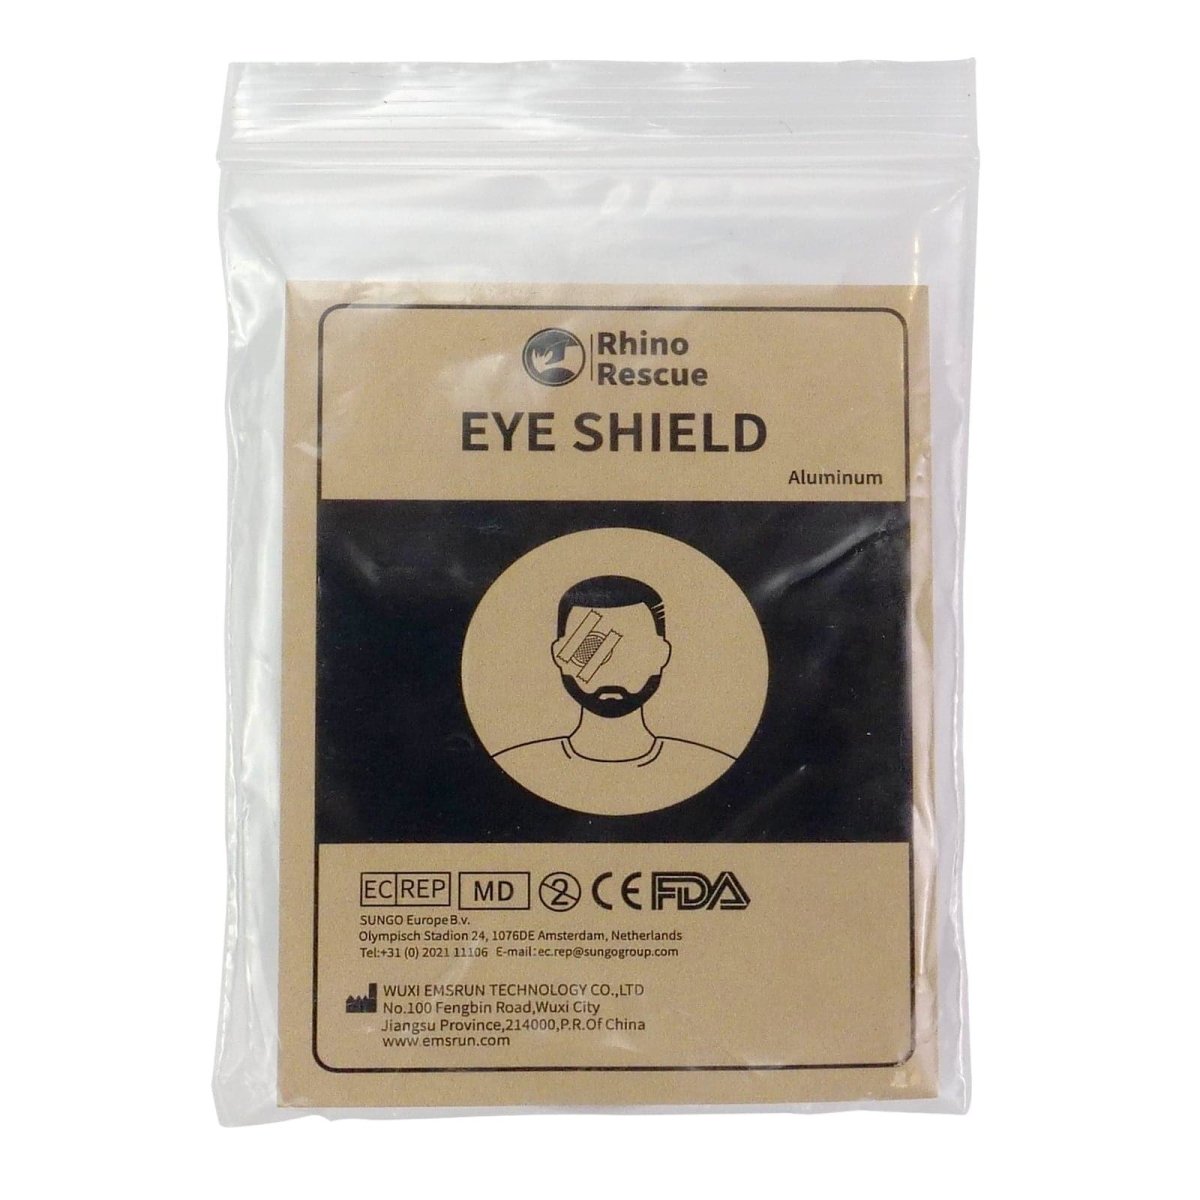 RHINO Eyes Shield Aluminum Aloy - RhinoRescue